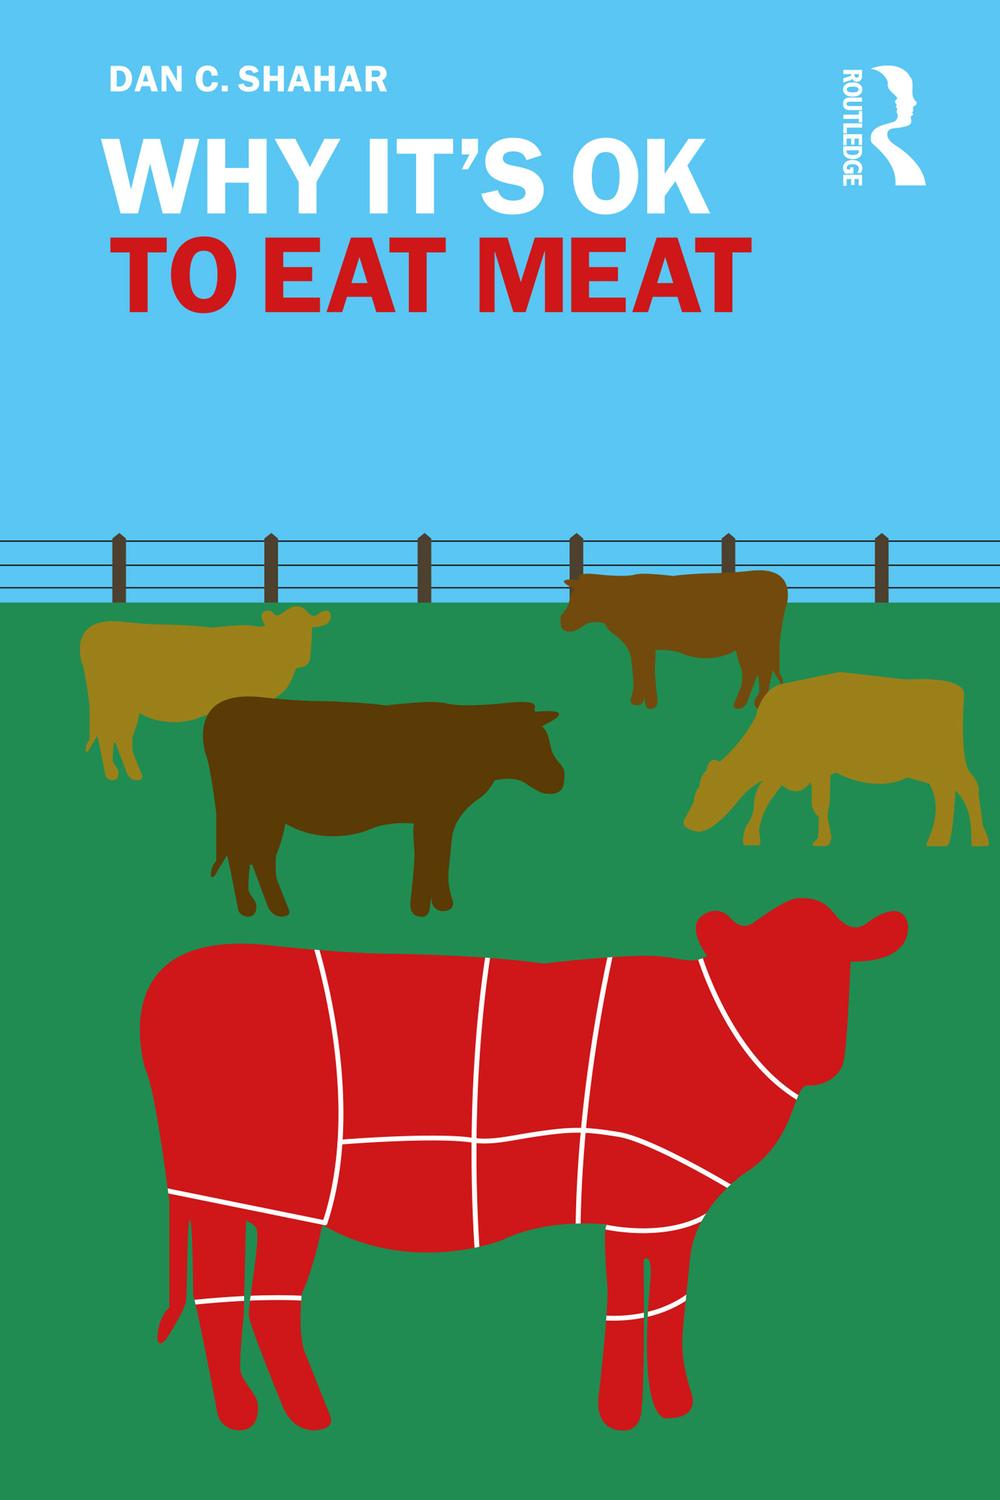 PDF] Why It's OK to Eat Meat by Dan C. Shahar eBook | Perlego